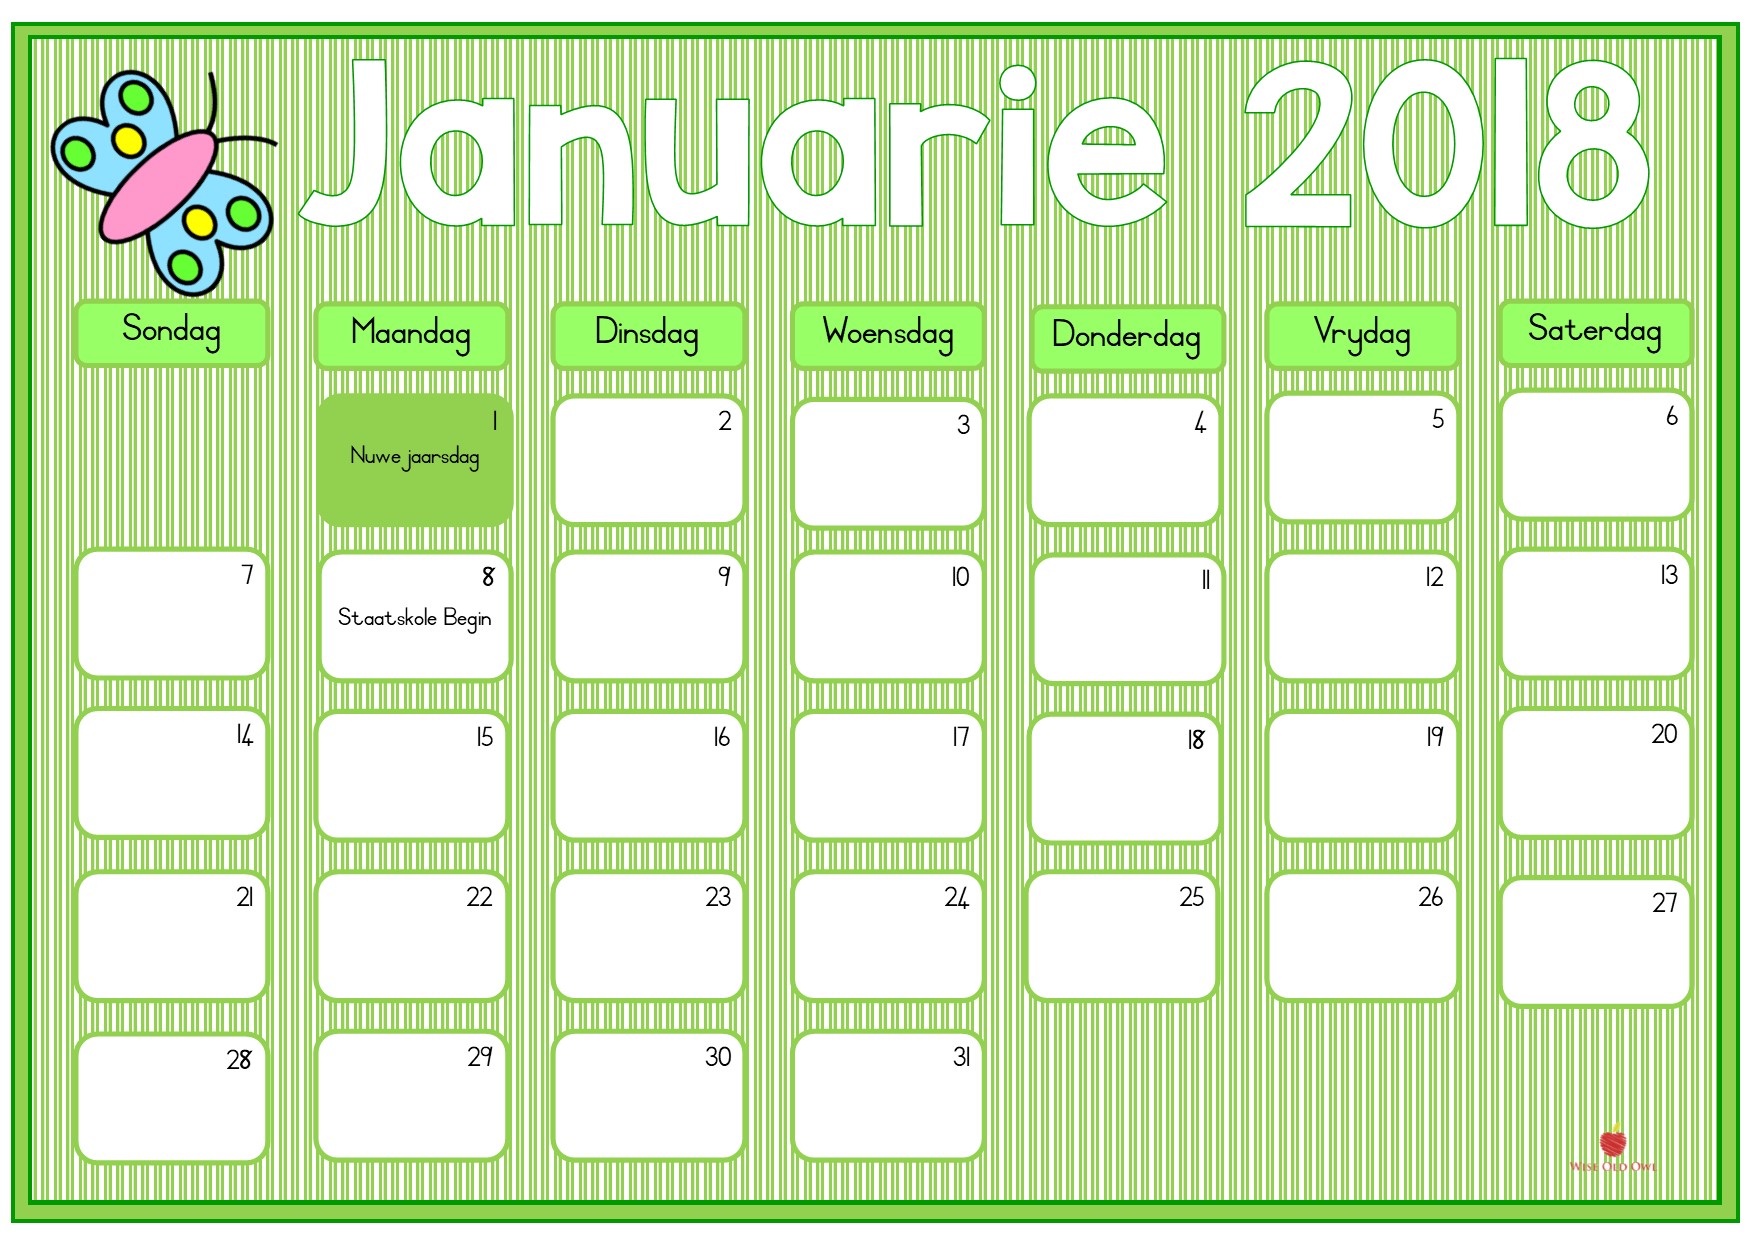 Kalender 2018 Images - Invitation Sample And Invitation Design